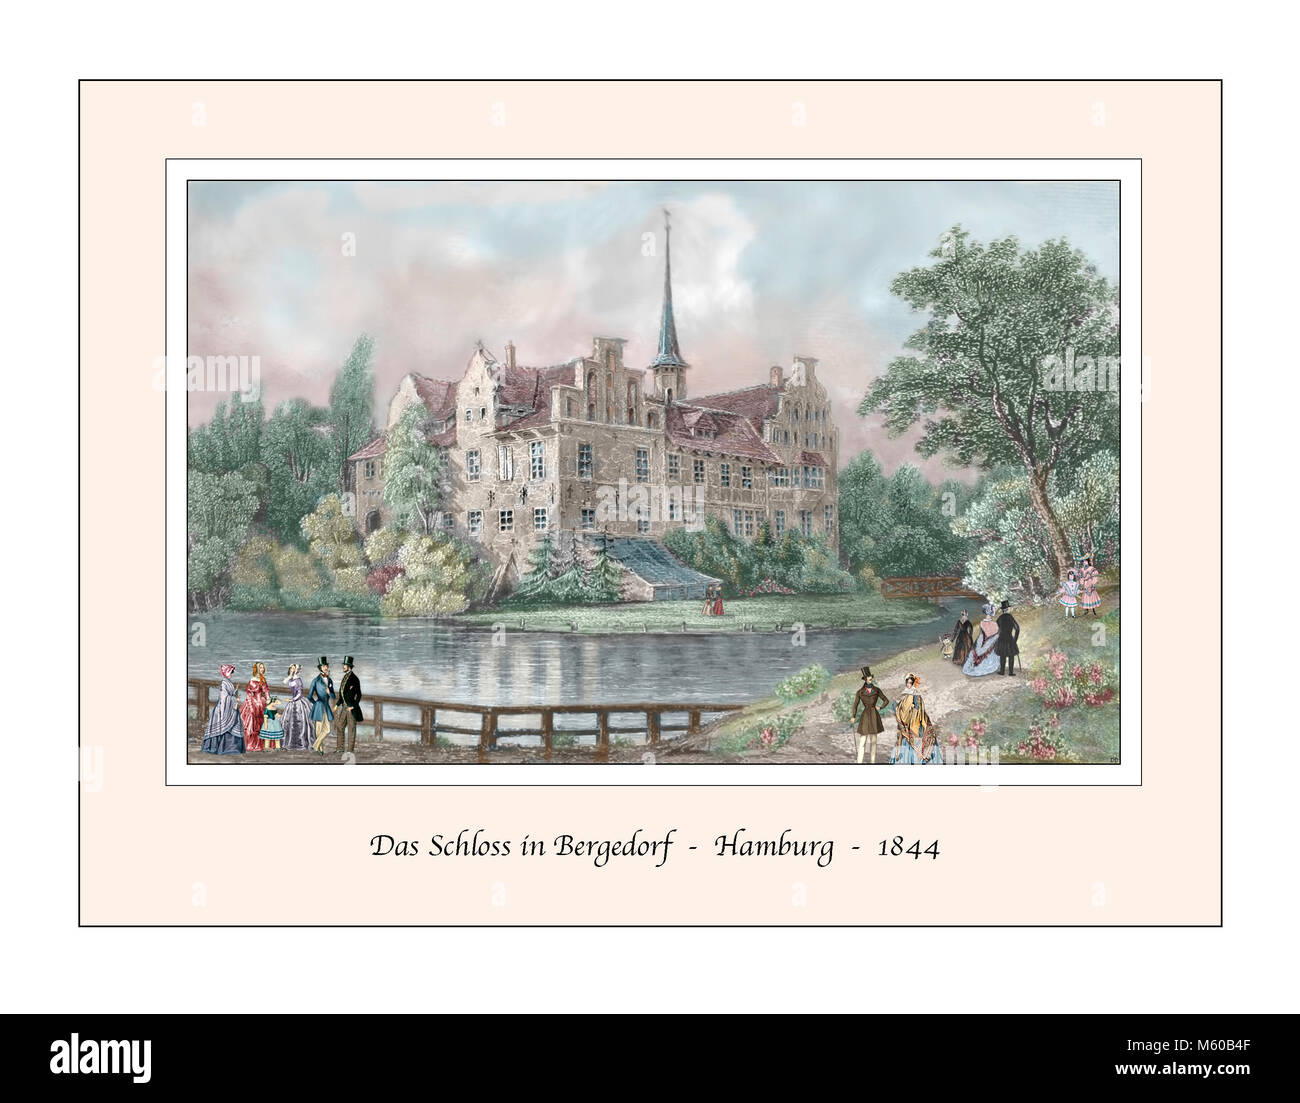 Schloss Bergedorf Hamburg Original Design from a 19th century Engraving Stock Photo